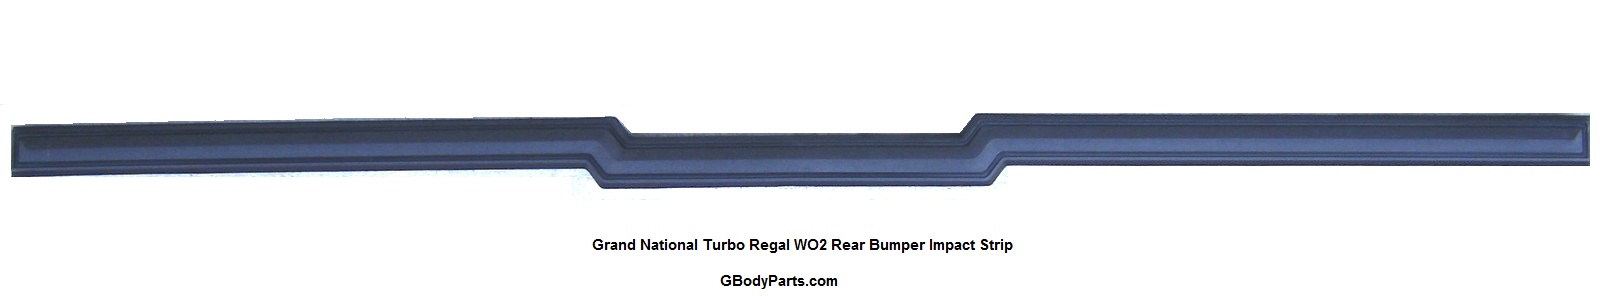 Grand National Rear Bumper Impact Strip (W02 package)